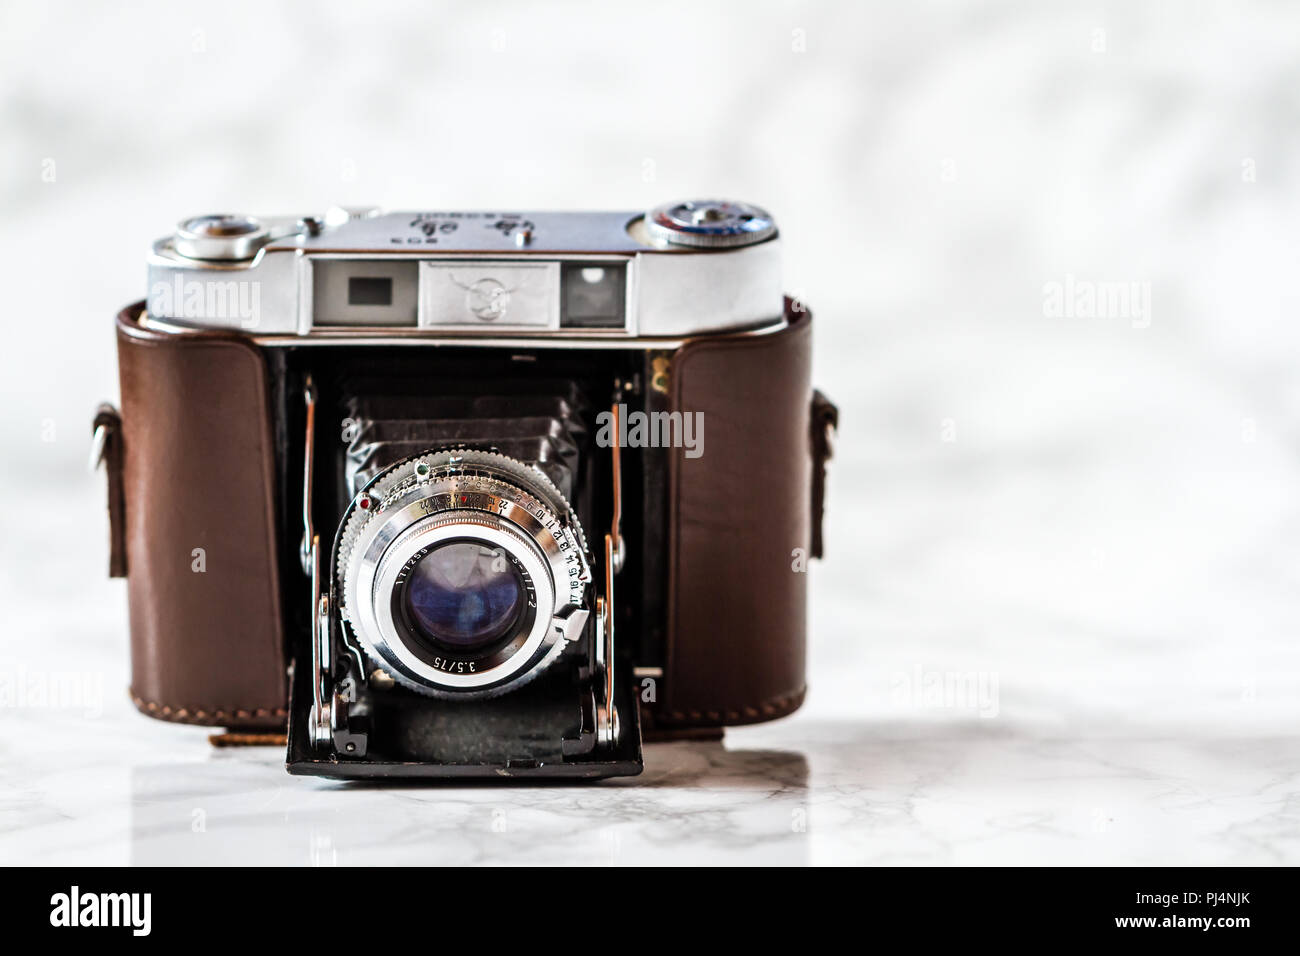 ESKISEHIR, TURCHIA - Agosto 28, 2018: Antico telecamera con custodia in pelle su Sfondo marmo Foto Stock